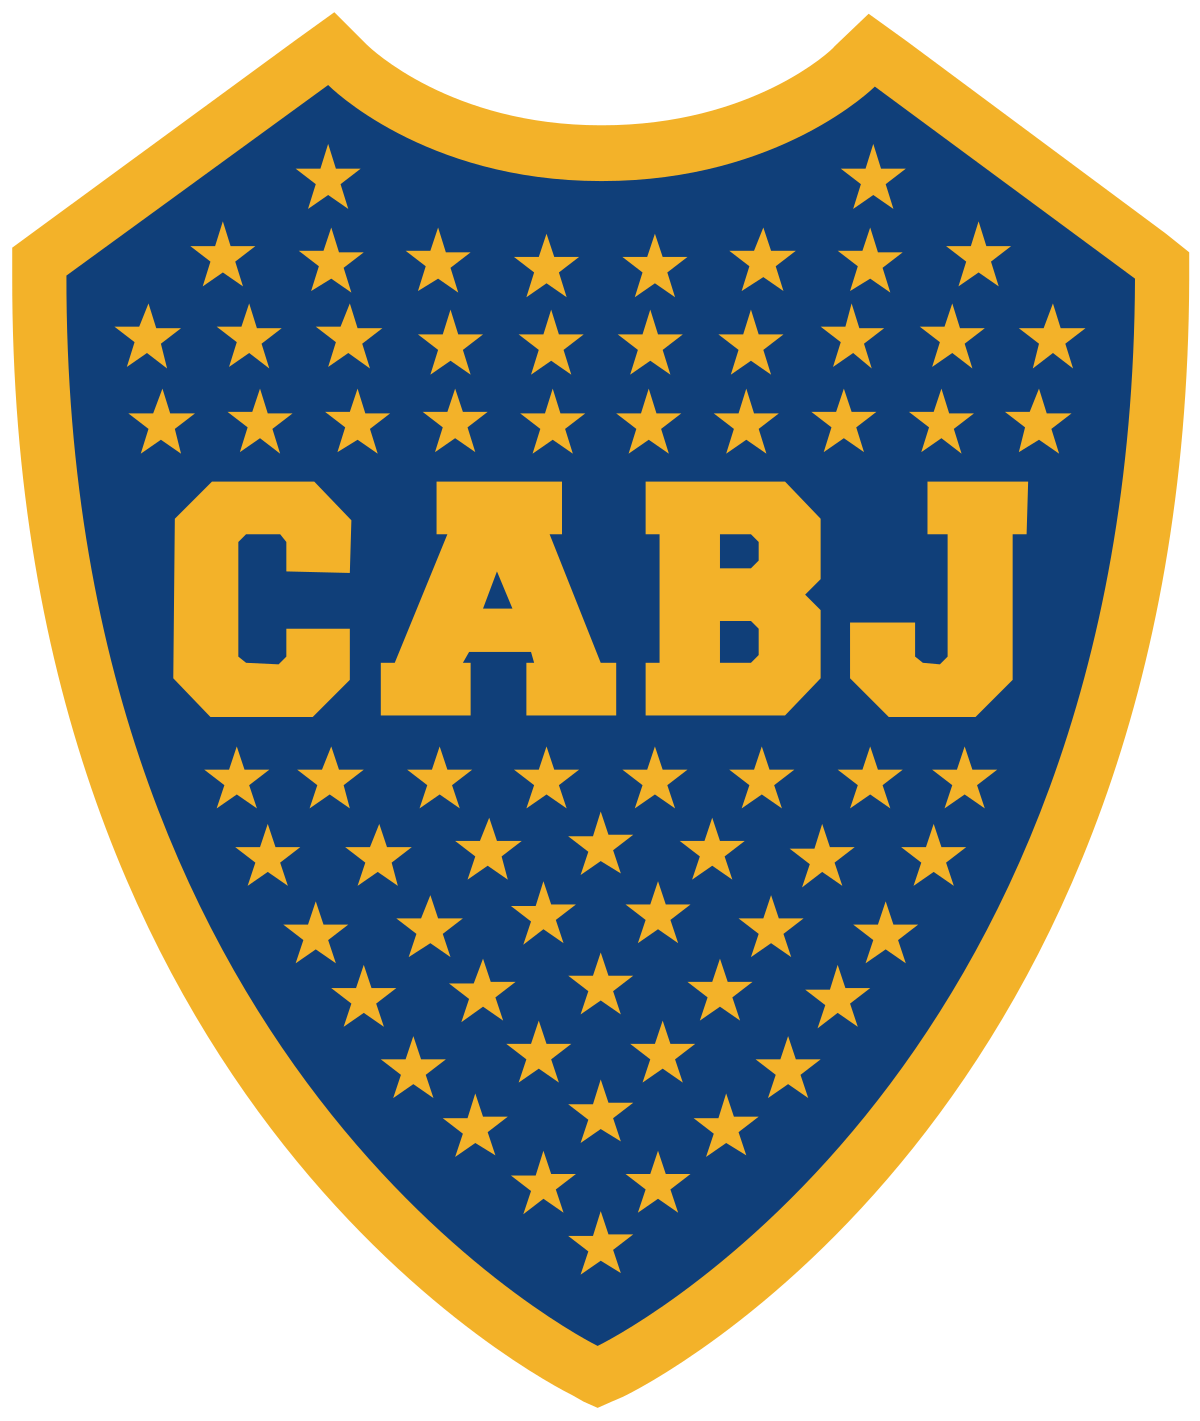 Argentinos Juniors - Wikipedia